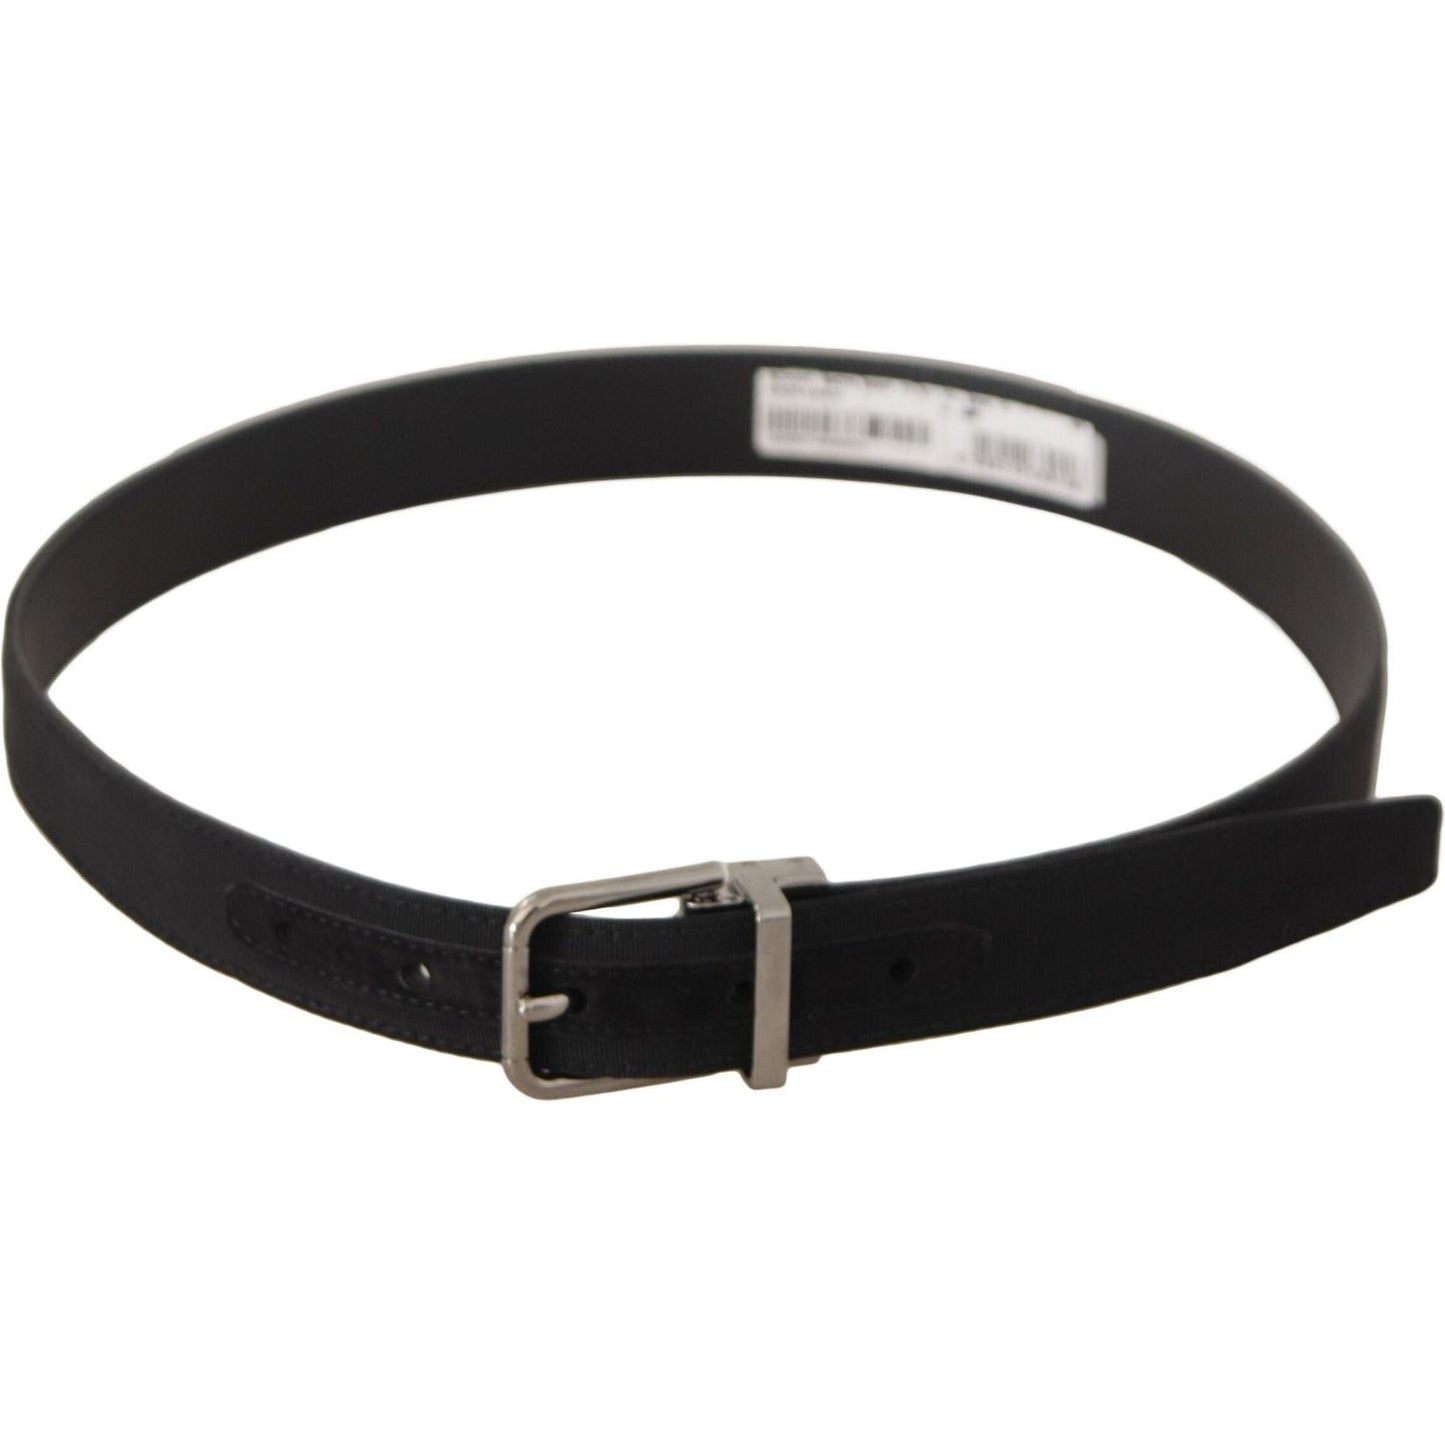 Dolce & Gabbana Elegant Black Canvas & Leather Belt black-canvas-leather-silver-tone-metal-buckle-belt